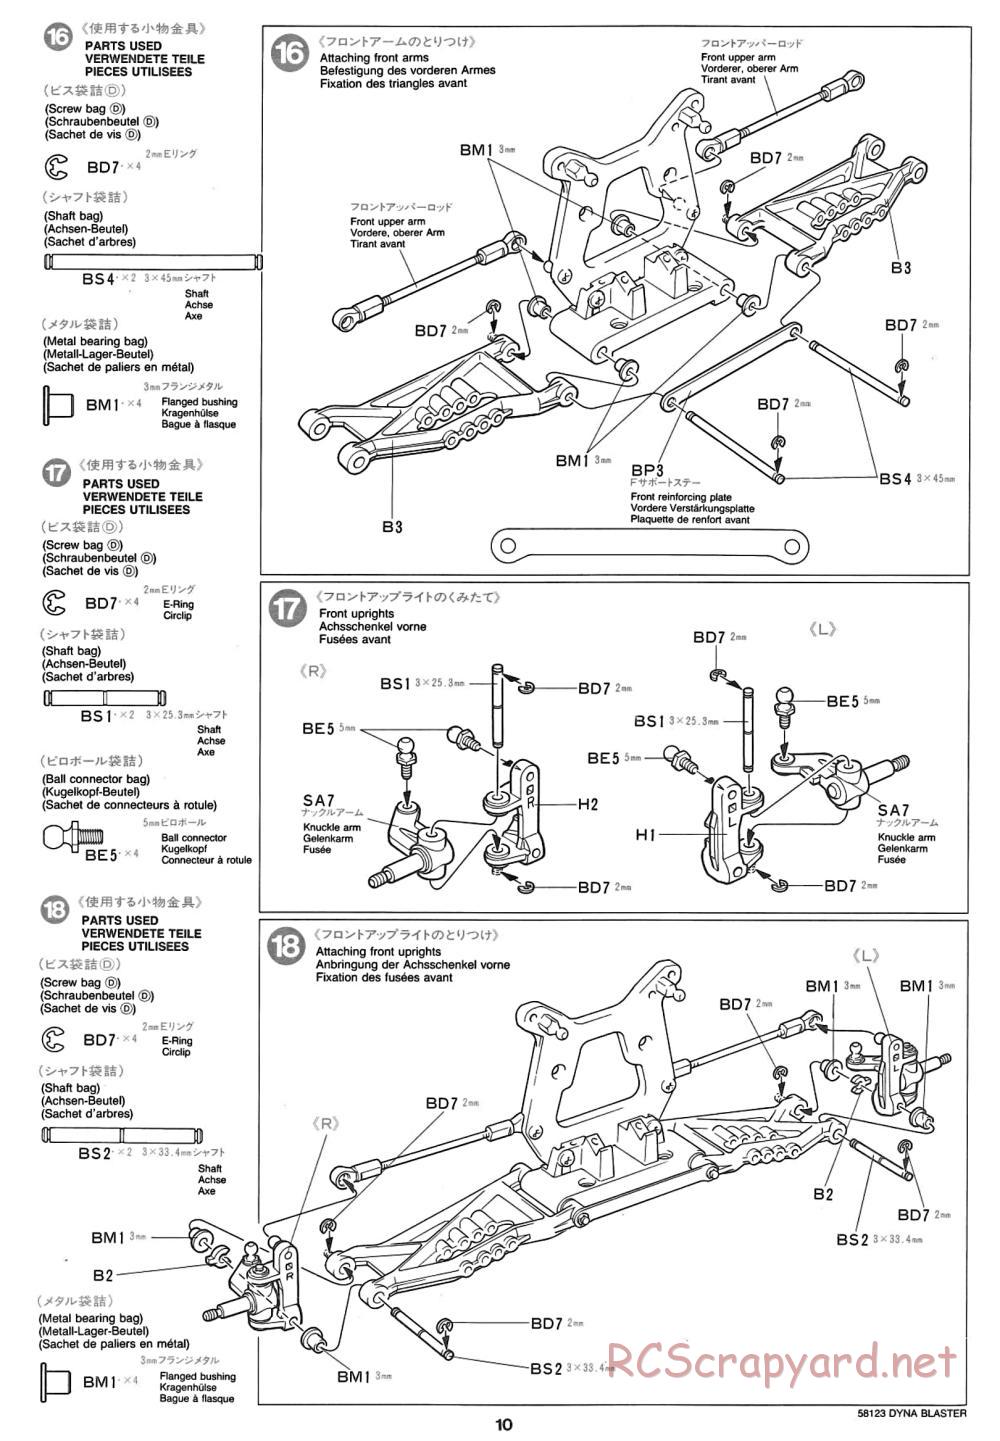 Tamiya - Dyna Blaster Chassis - Manual - Page 10